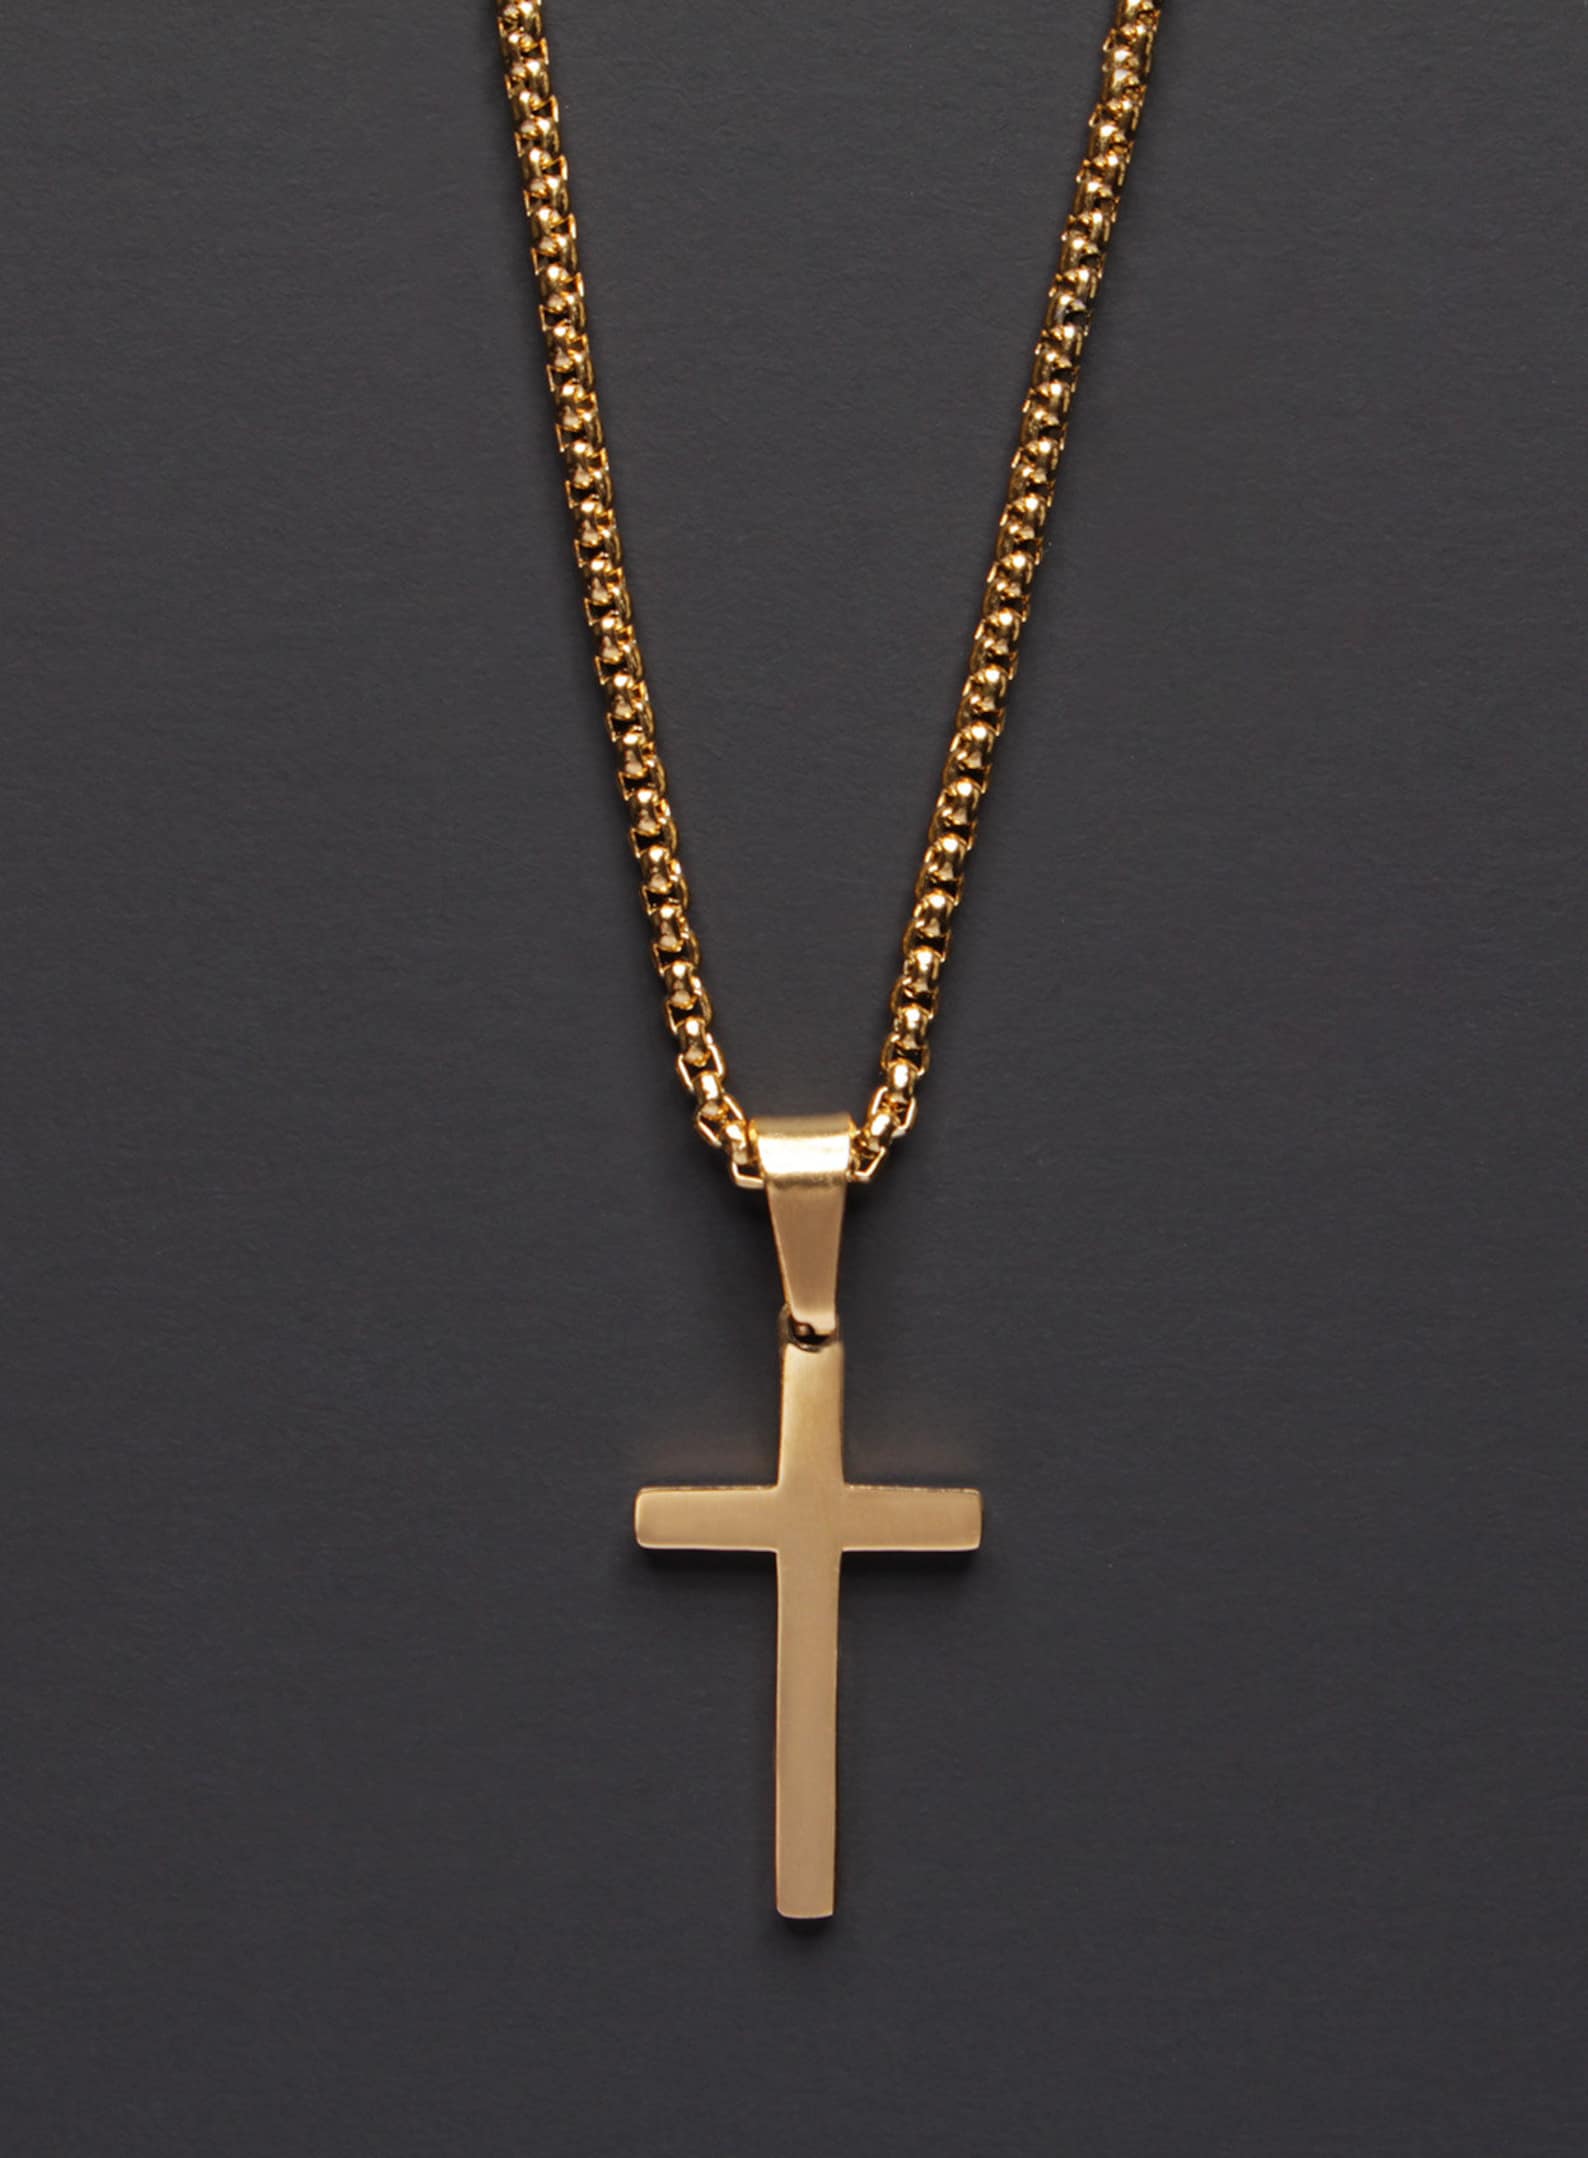 Cross Necklace for Men Men's Gold Cross Necklace - Etsy